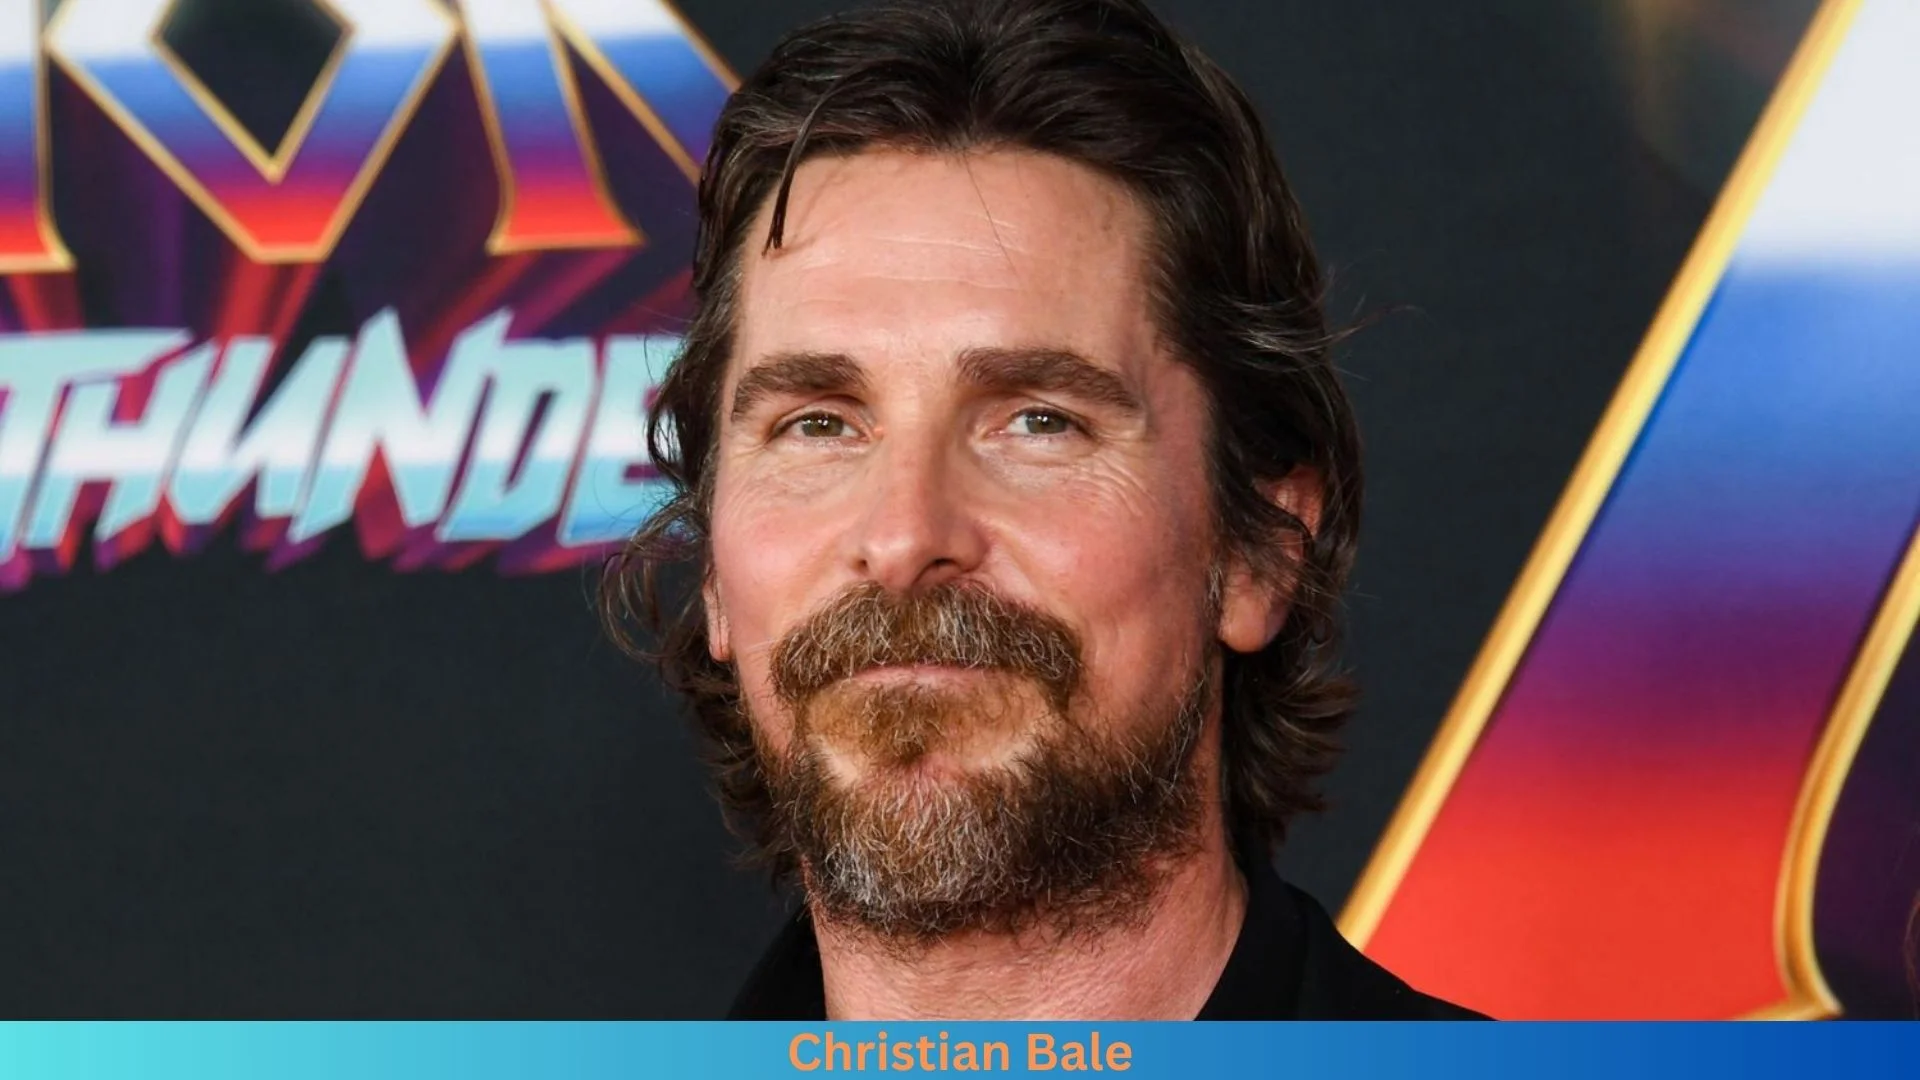 Net Worth of Christian Bale